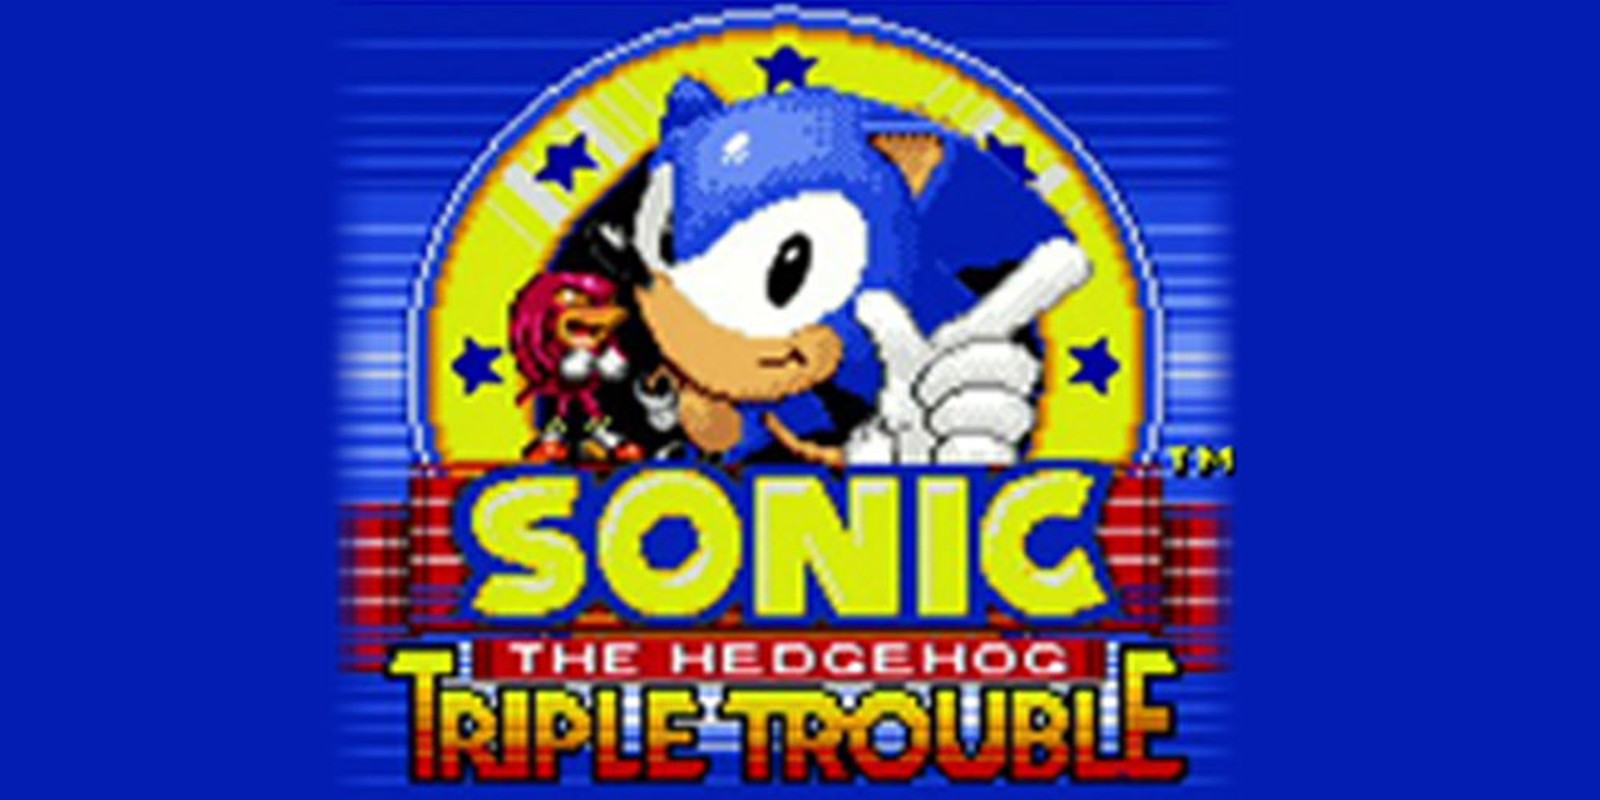 Sonic the Hedgehog™: Triple Trouble | Virtual Console (Nintendo 3DS) | Games | Nintendo1600 x 800